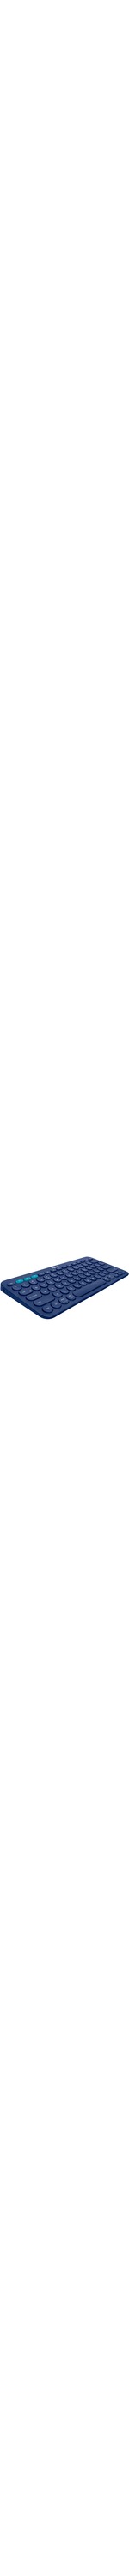 Logitech K380 Keyboard - Wireless Connectivity - Bluetooth - Blue